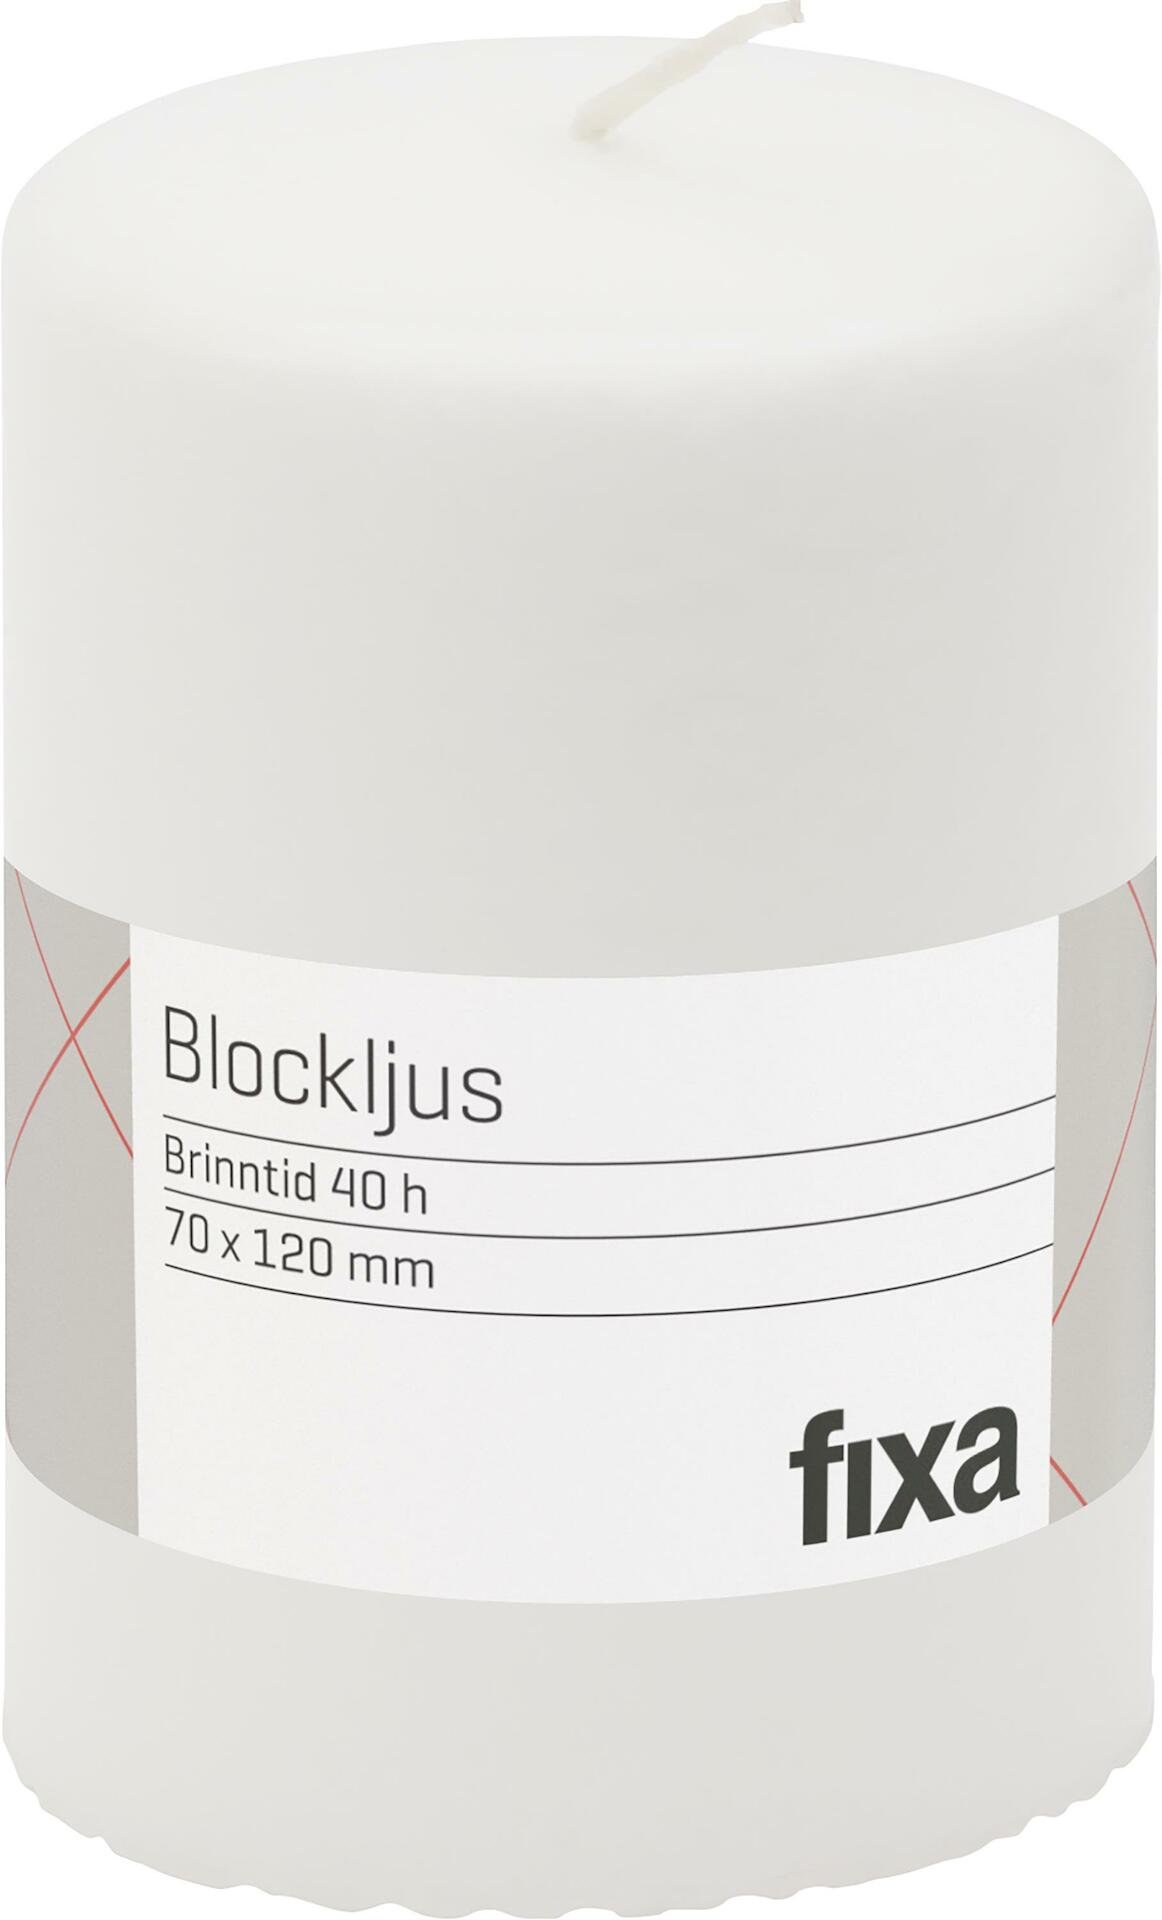 FIXA Blockljus 7x12 cm Vit 1 st